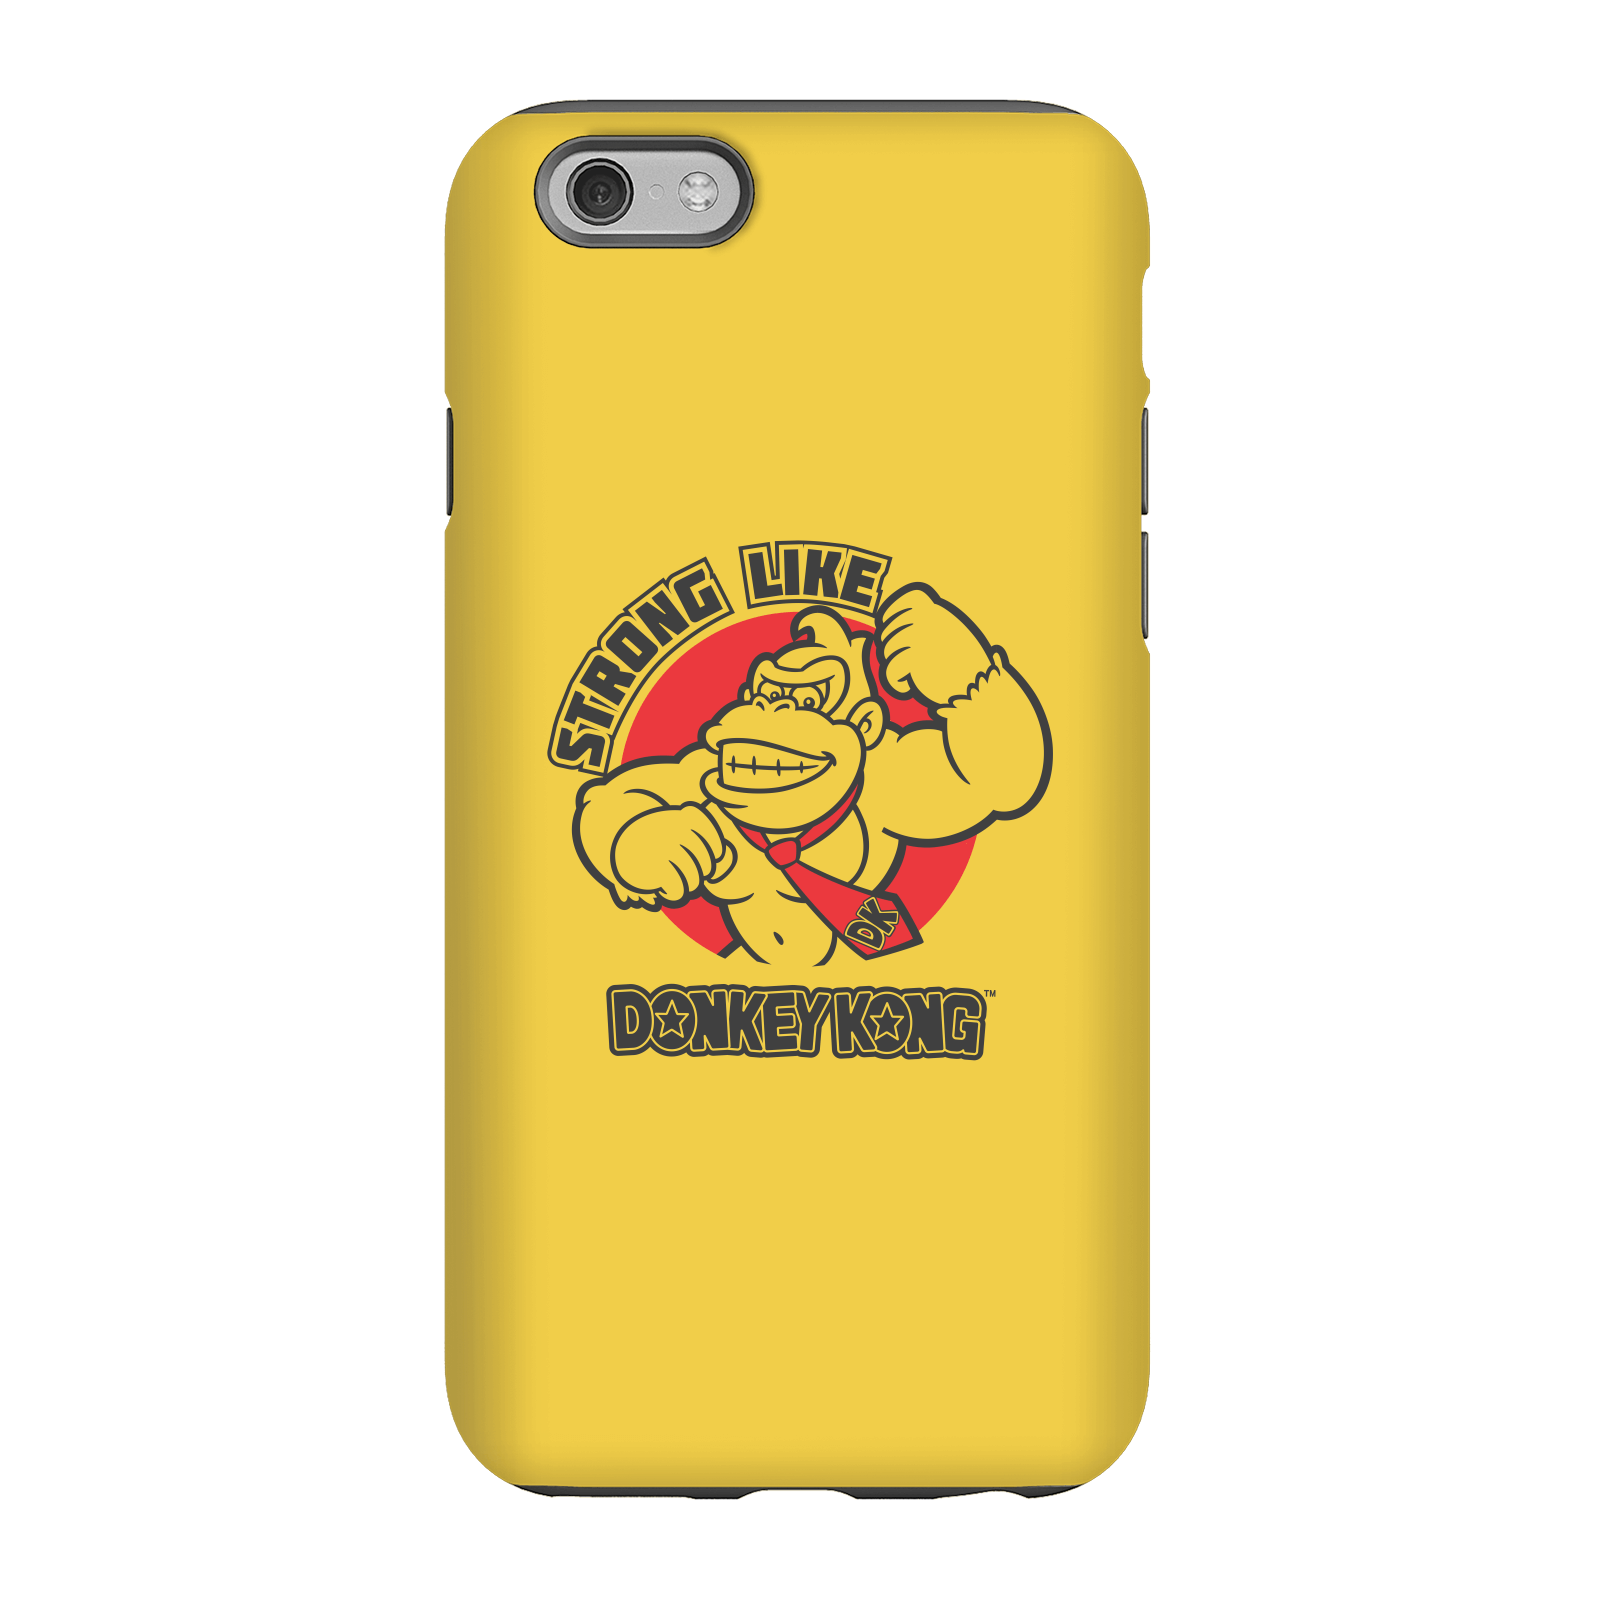 Nintendo Donkey Kong Strong Like Donkey Kong Phone Case - iPhone 6 - Tough Case - Matte